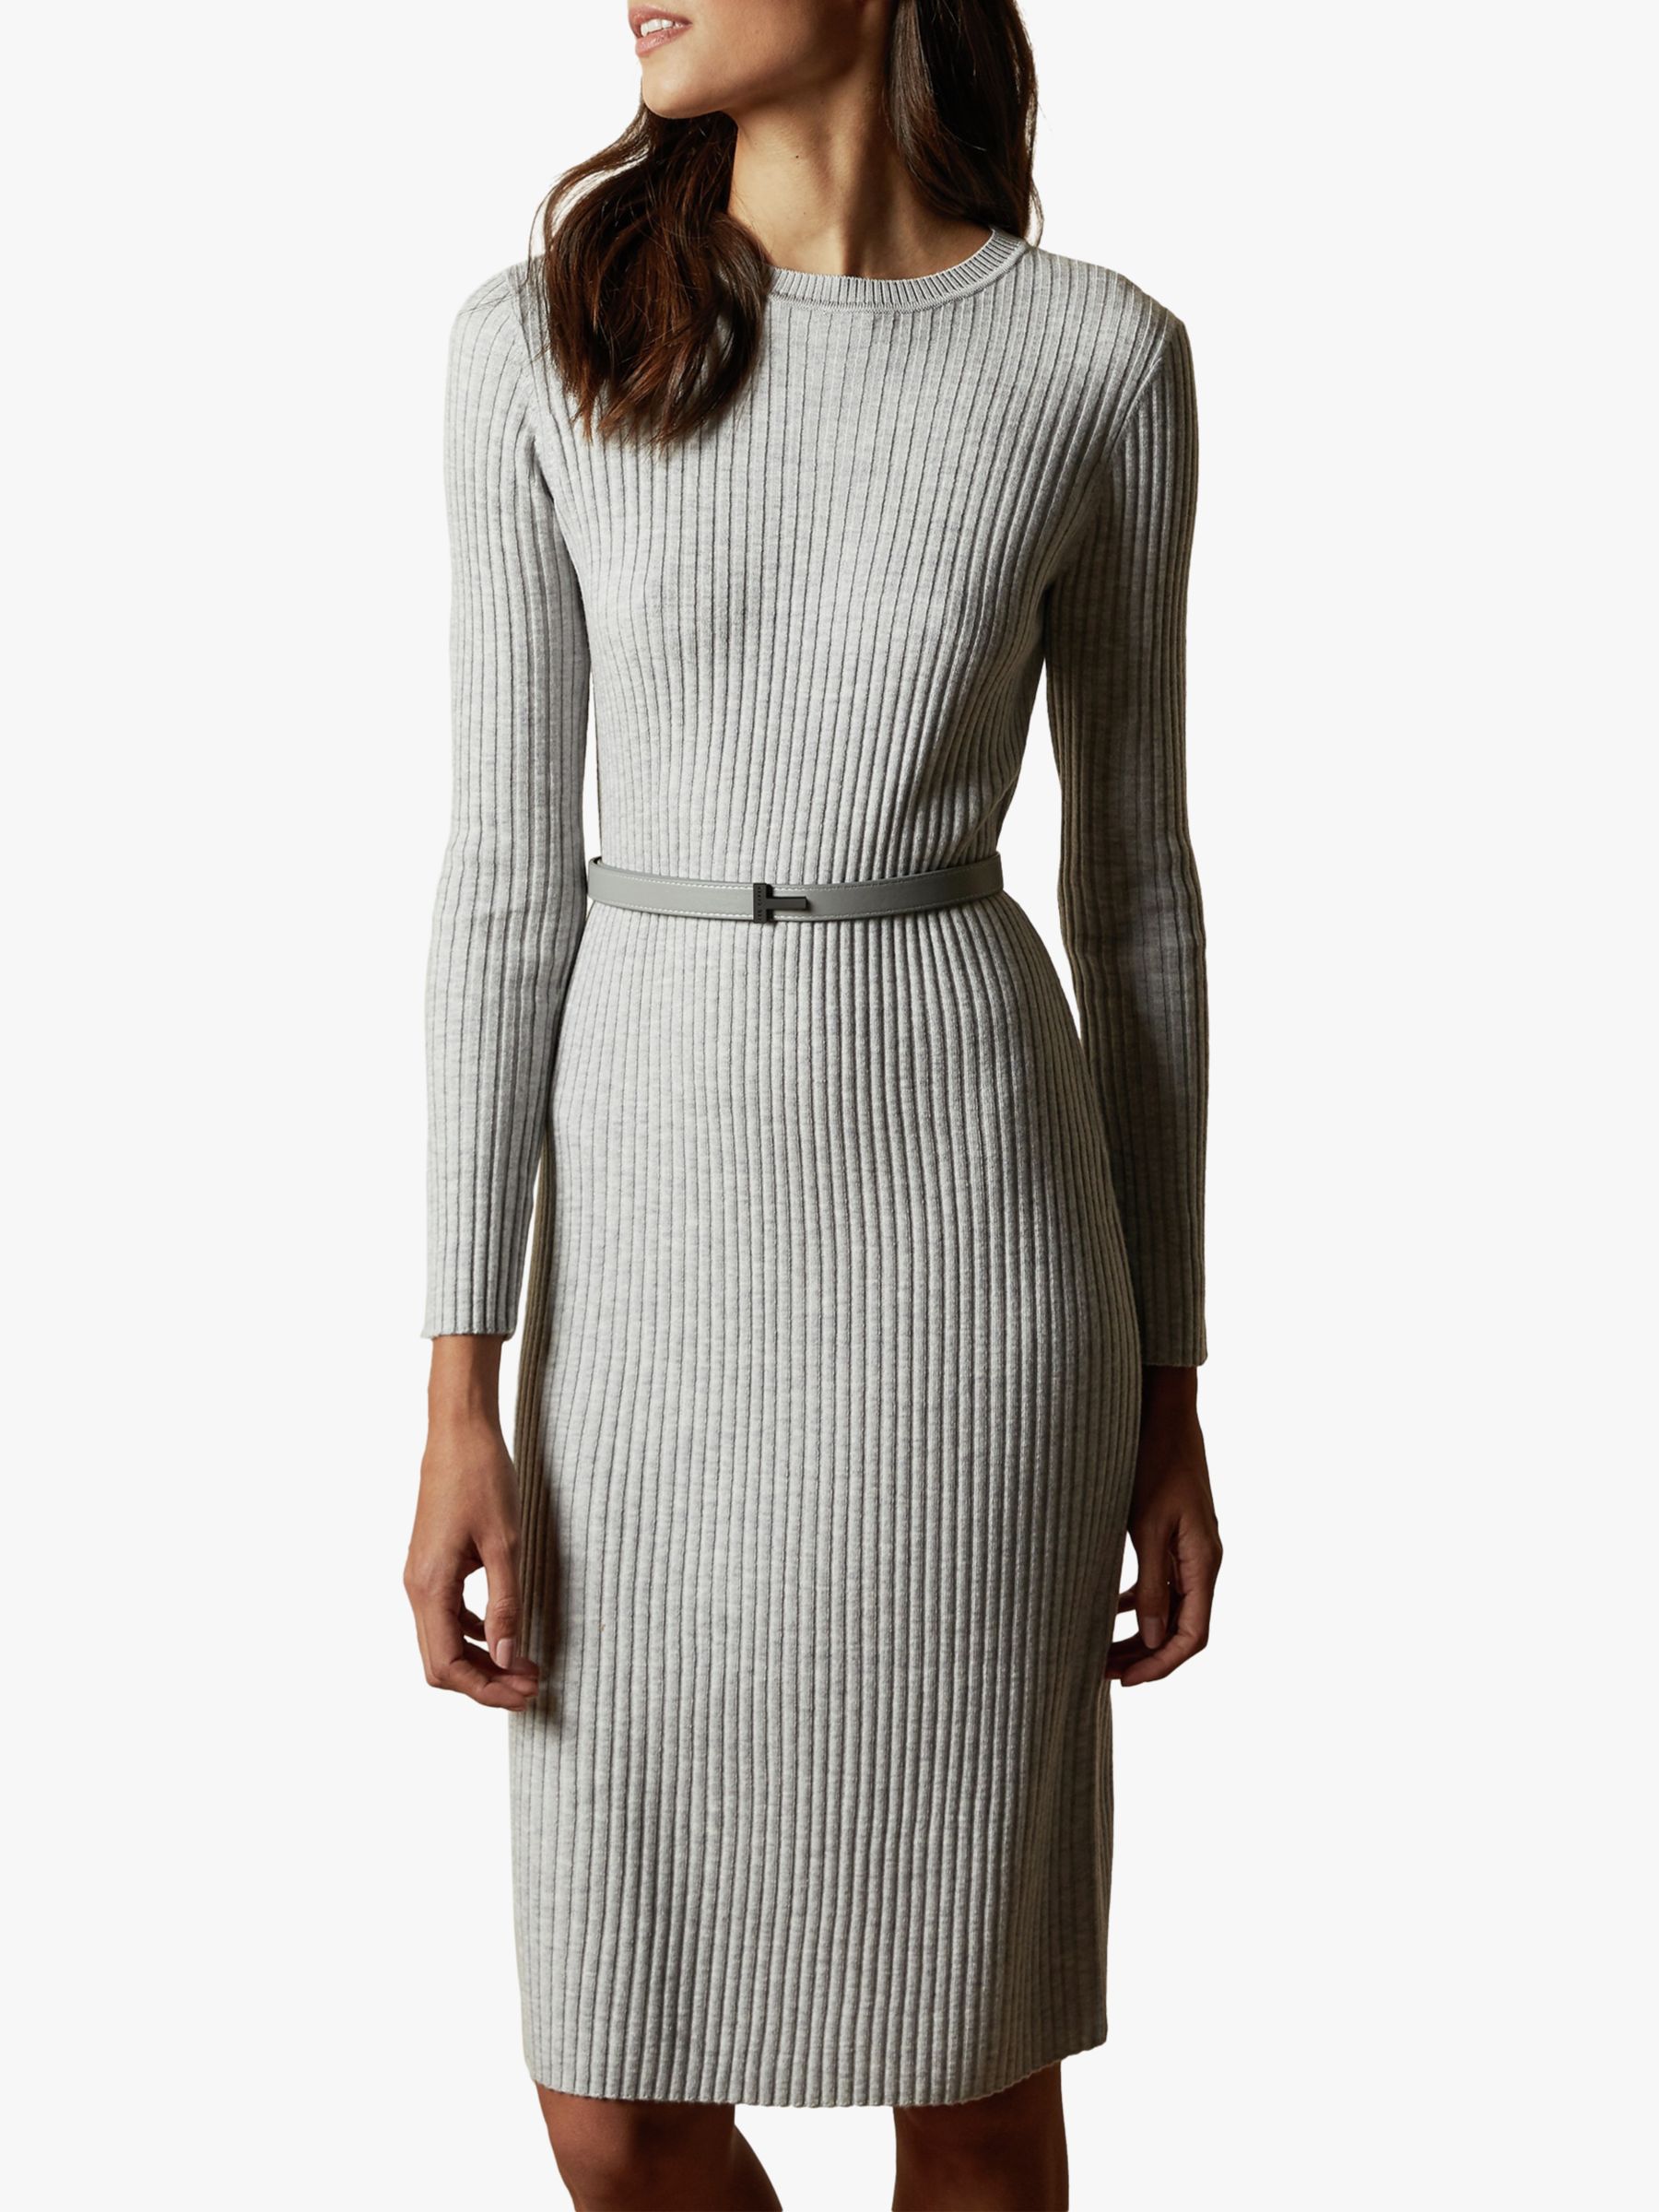 long grey knit dress